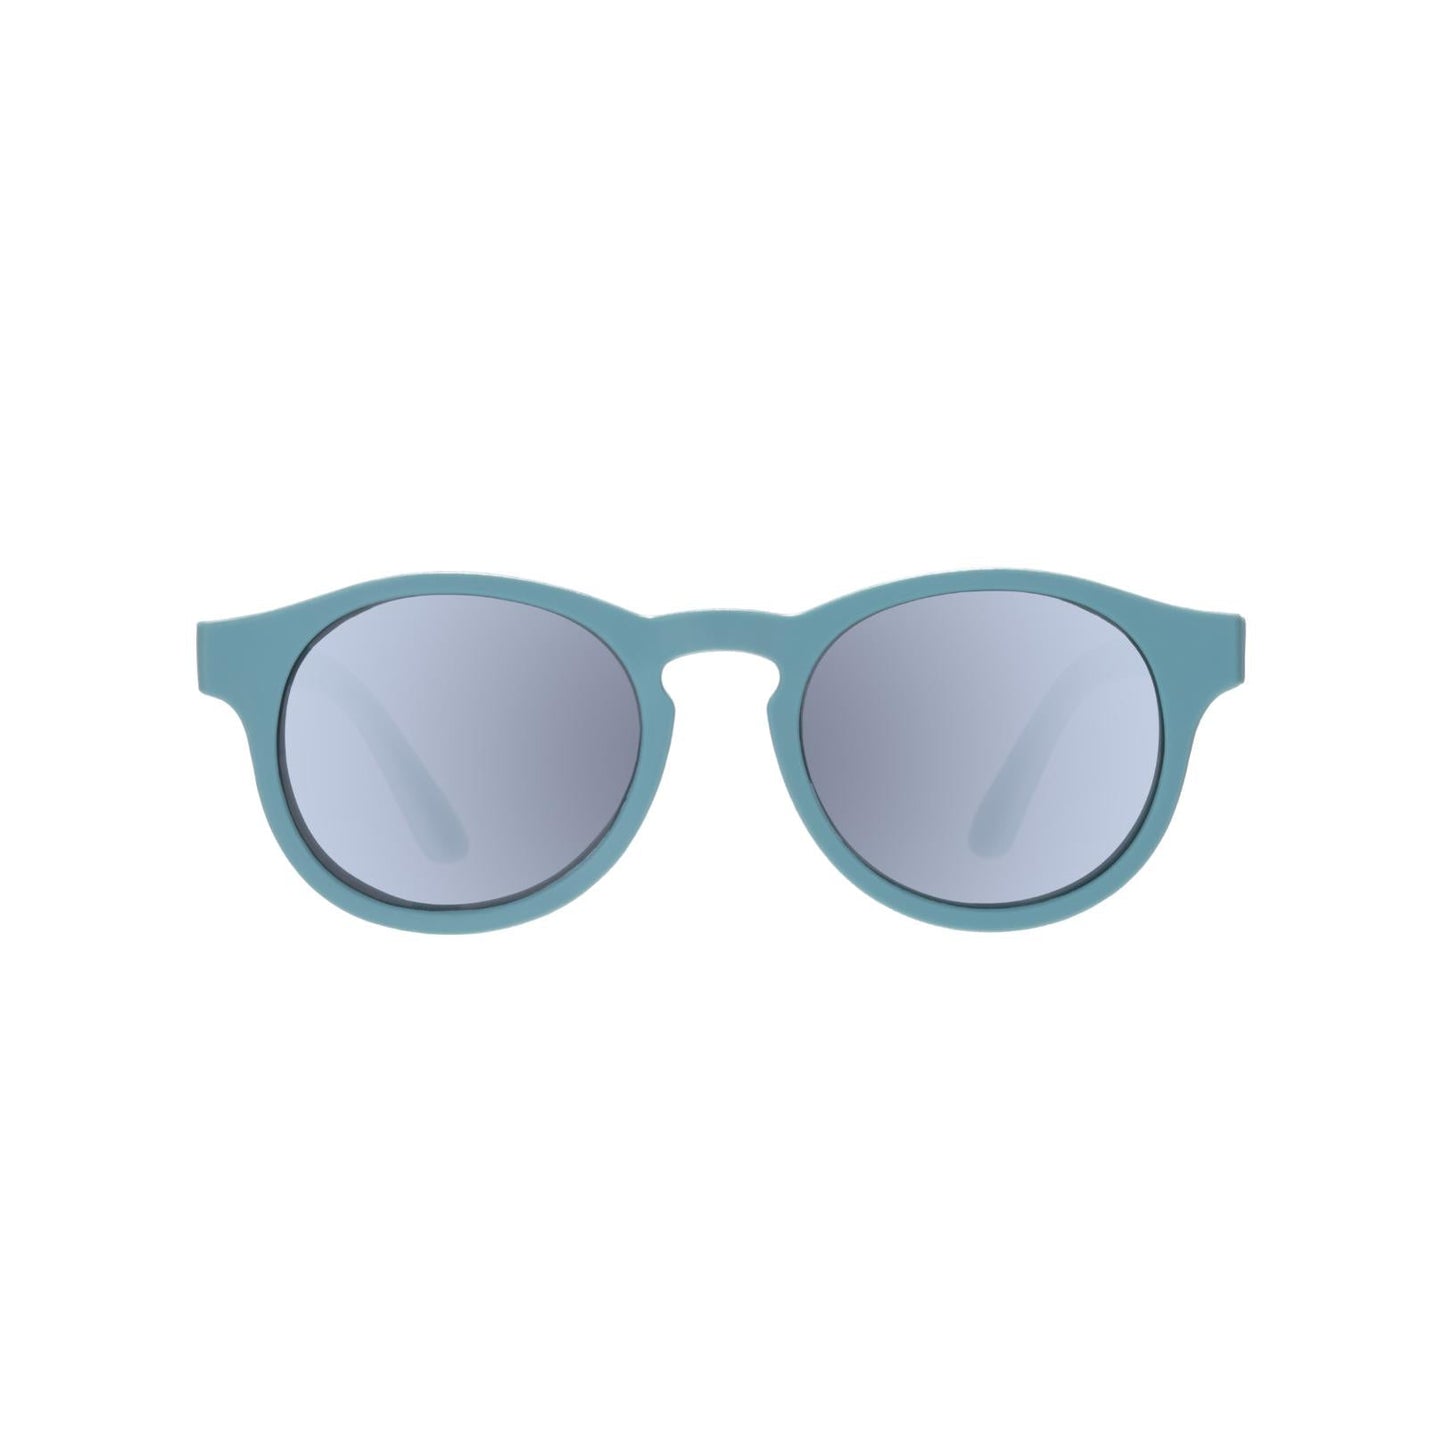 The Seafarer: Blue Keyhole w/ Polarized Silver Mirror lens Sunglasses